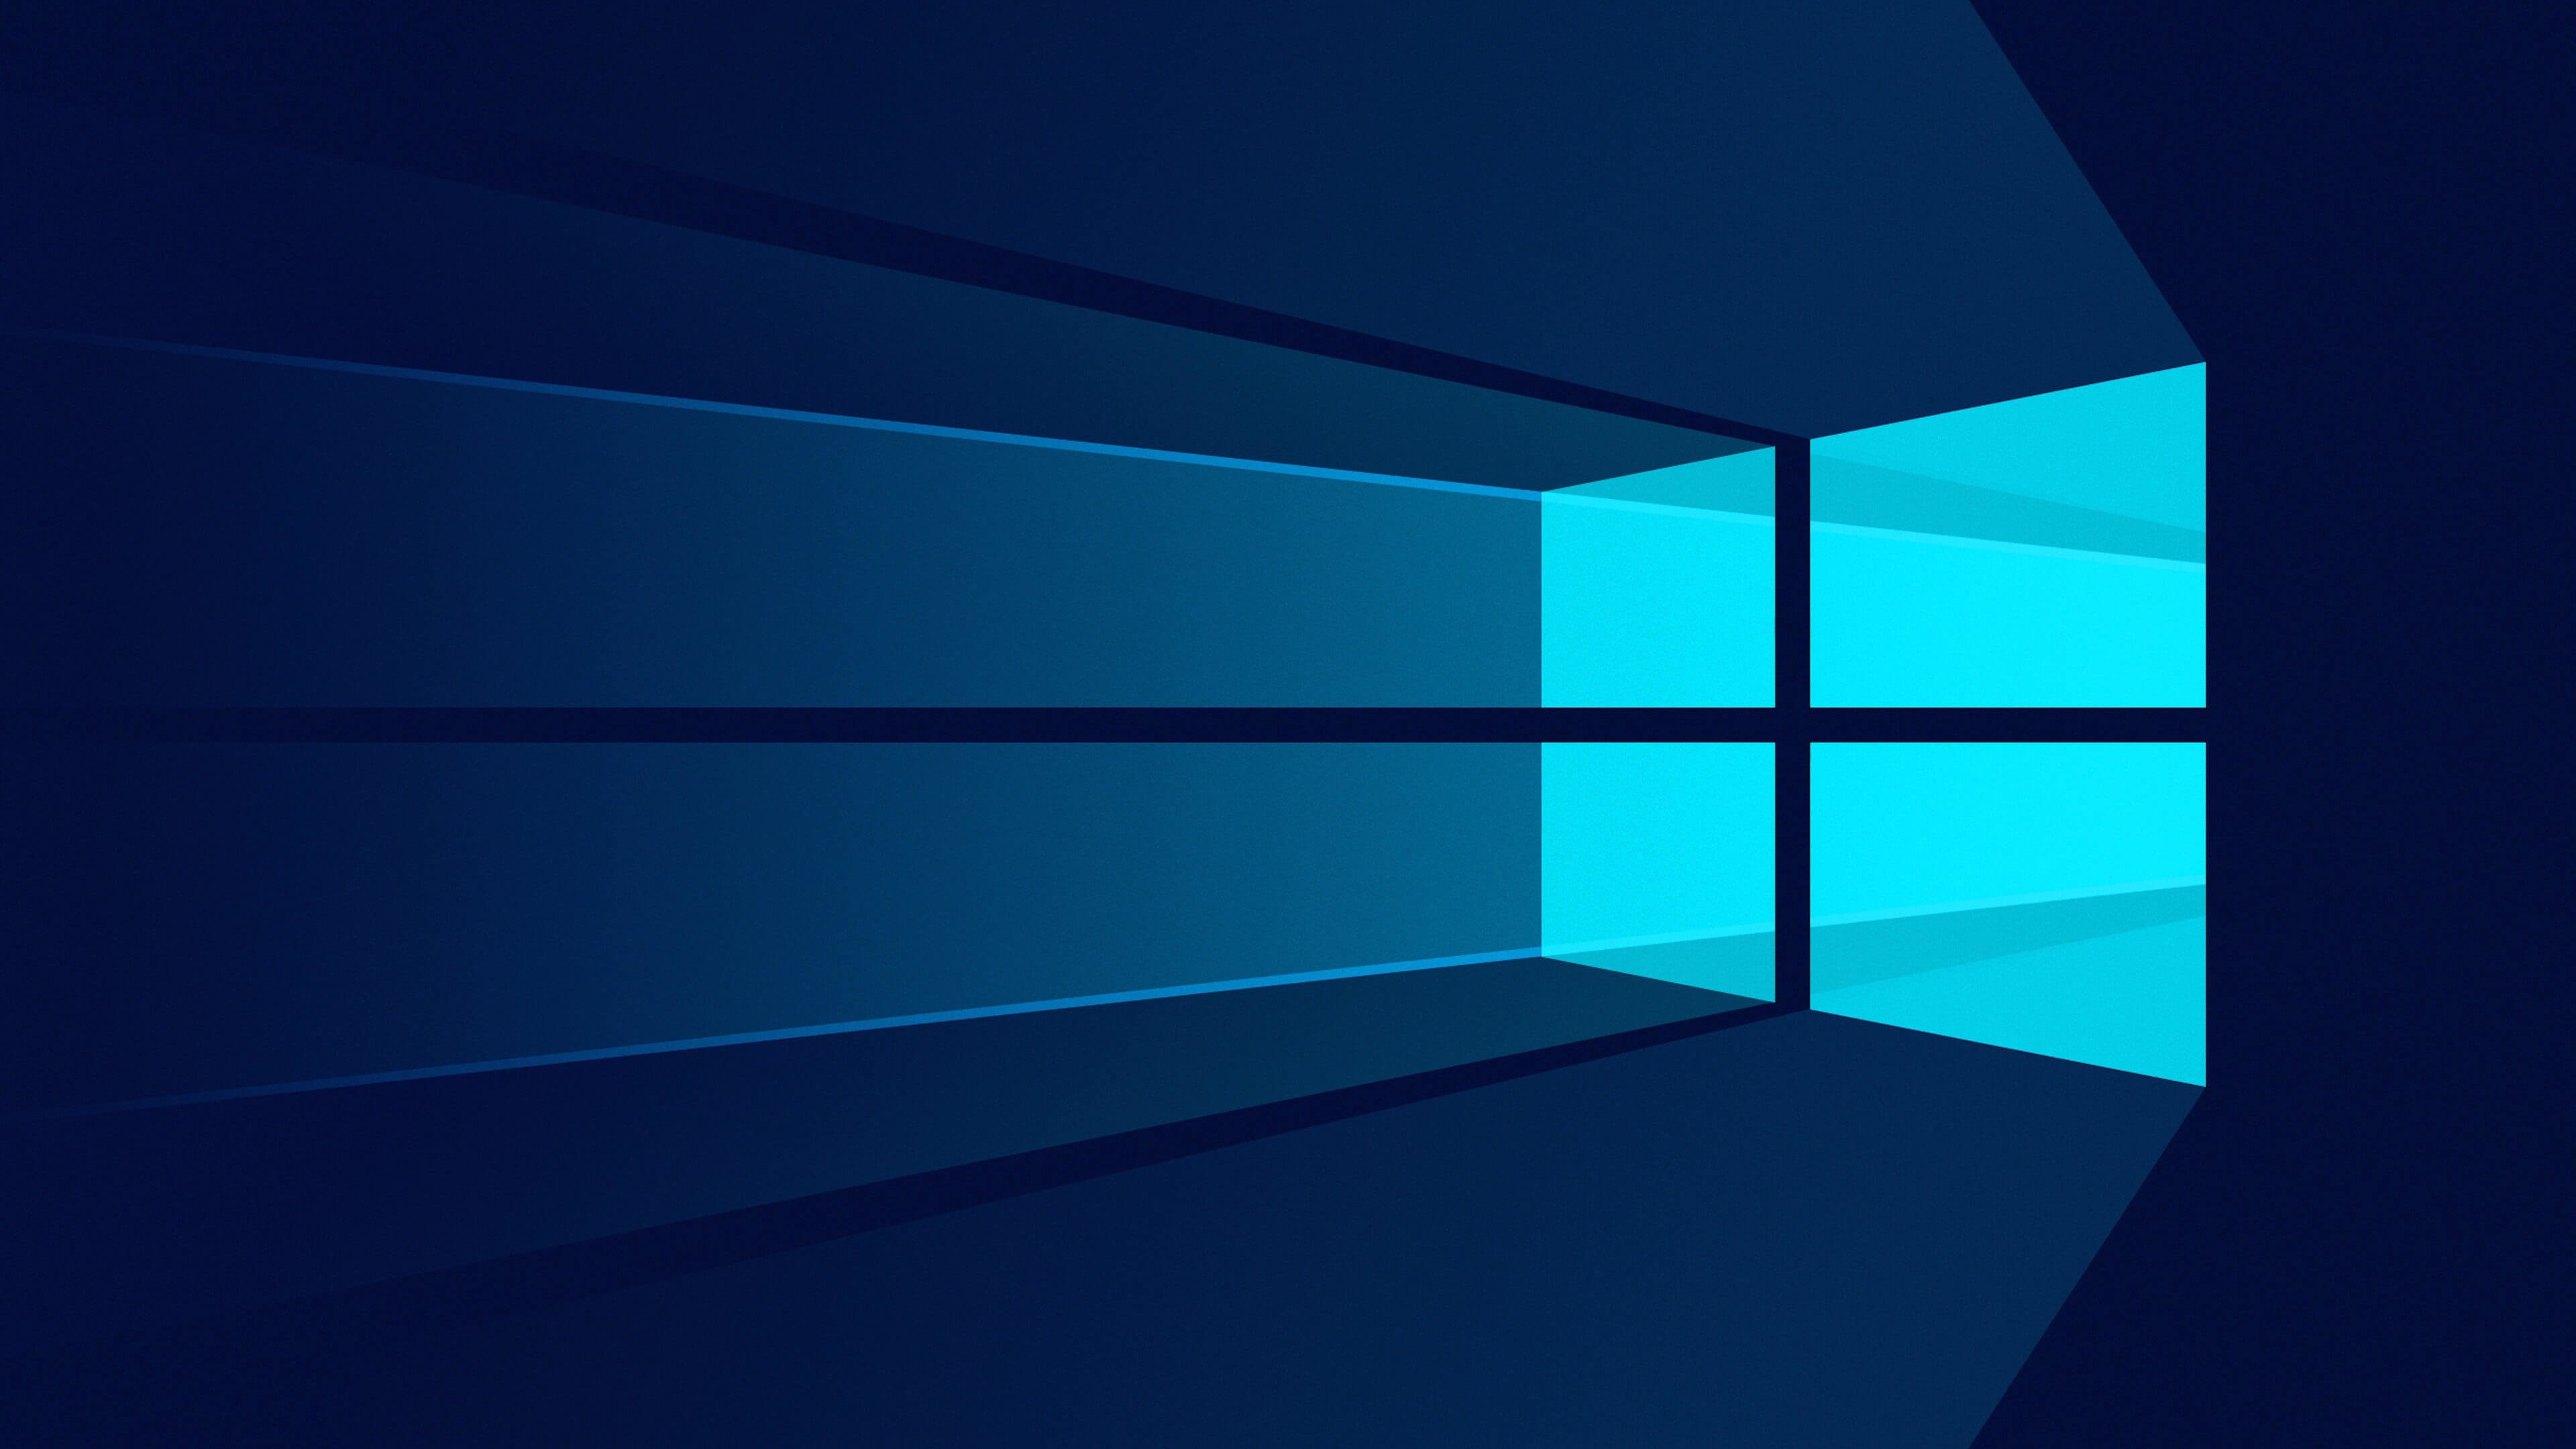 Windows 10 4k Ultra Hd Wallpaper 3840x2160 Images - vrogue.co